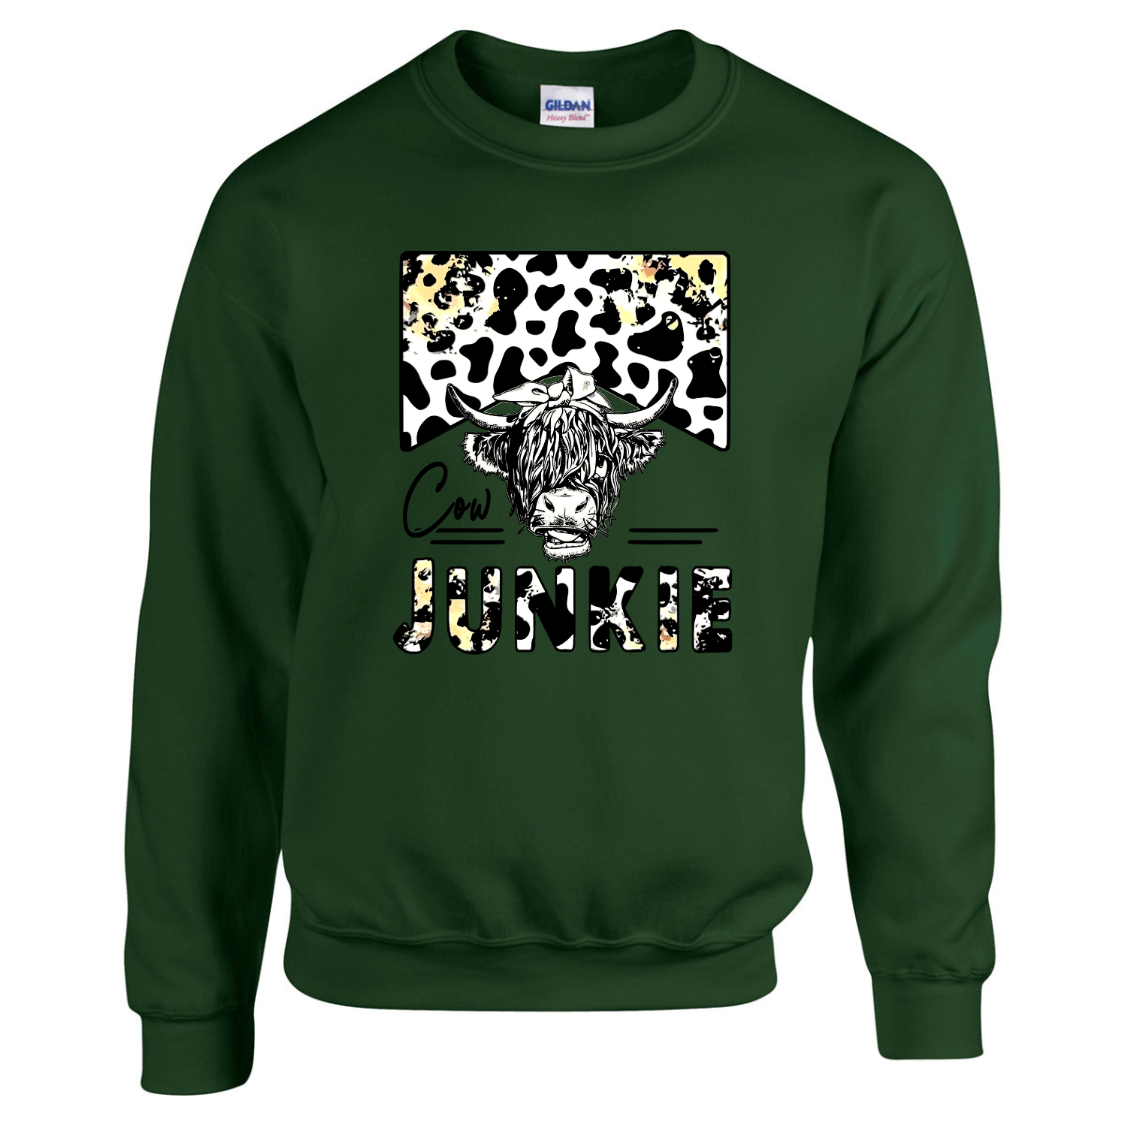 Cow Junkie Highland Cow Sweatshirt: Western Graphic, Unique Style